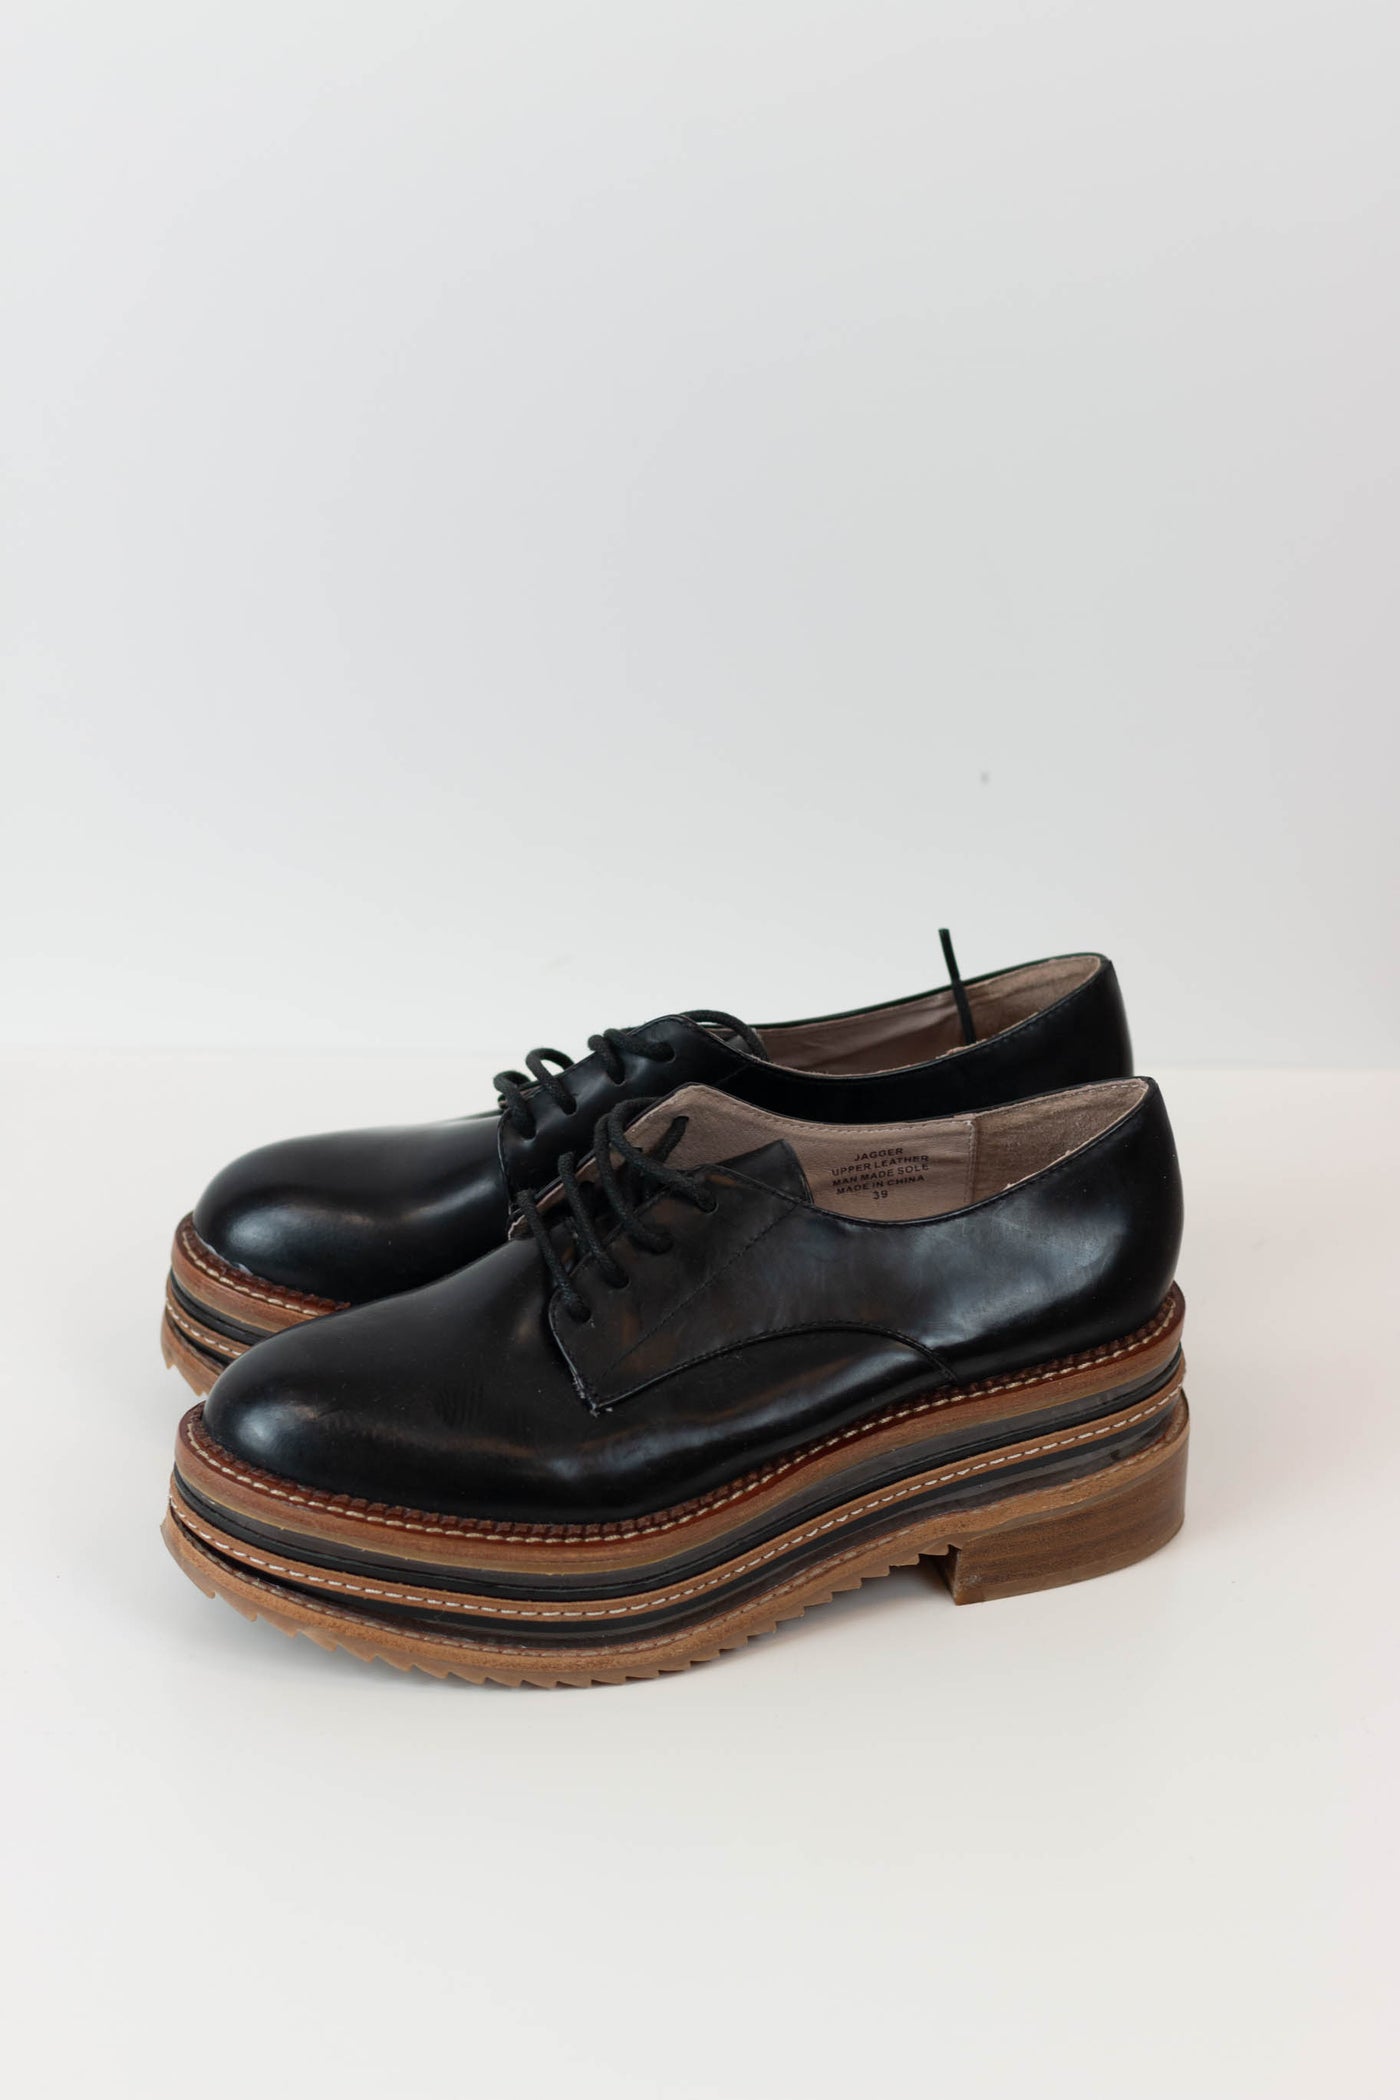 Zapatos negros con de segunda mano – it.closet